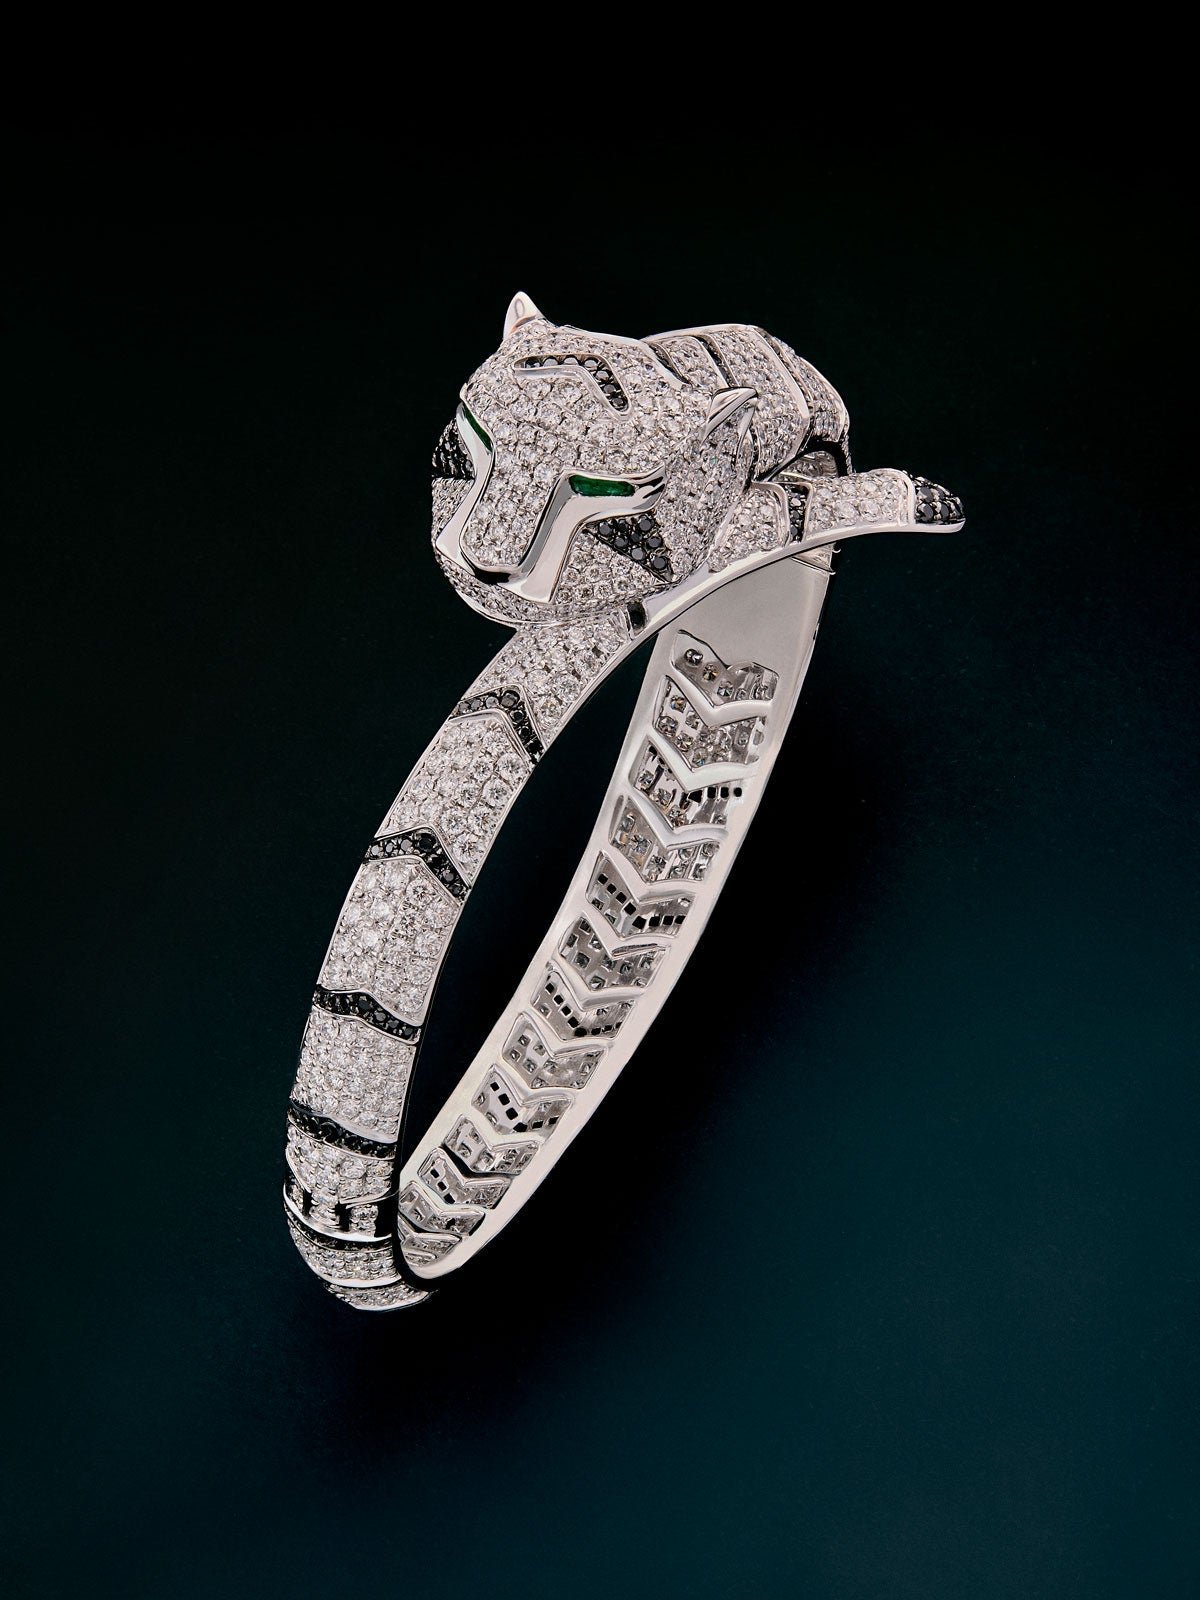 Rigid 18K white gold bracelet with 747 brilliant-cut white diamonds with a total of 8.17 cts, 241 brilliant-cut black diamonds with a total of 1.49 cts and 2 trapezoid-cut emeralds with a total of 0.13 tiger shaped cts